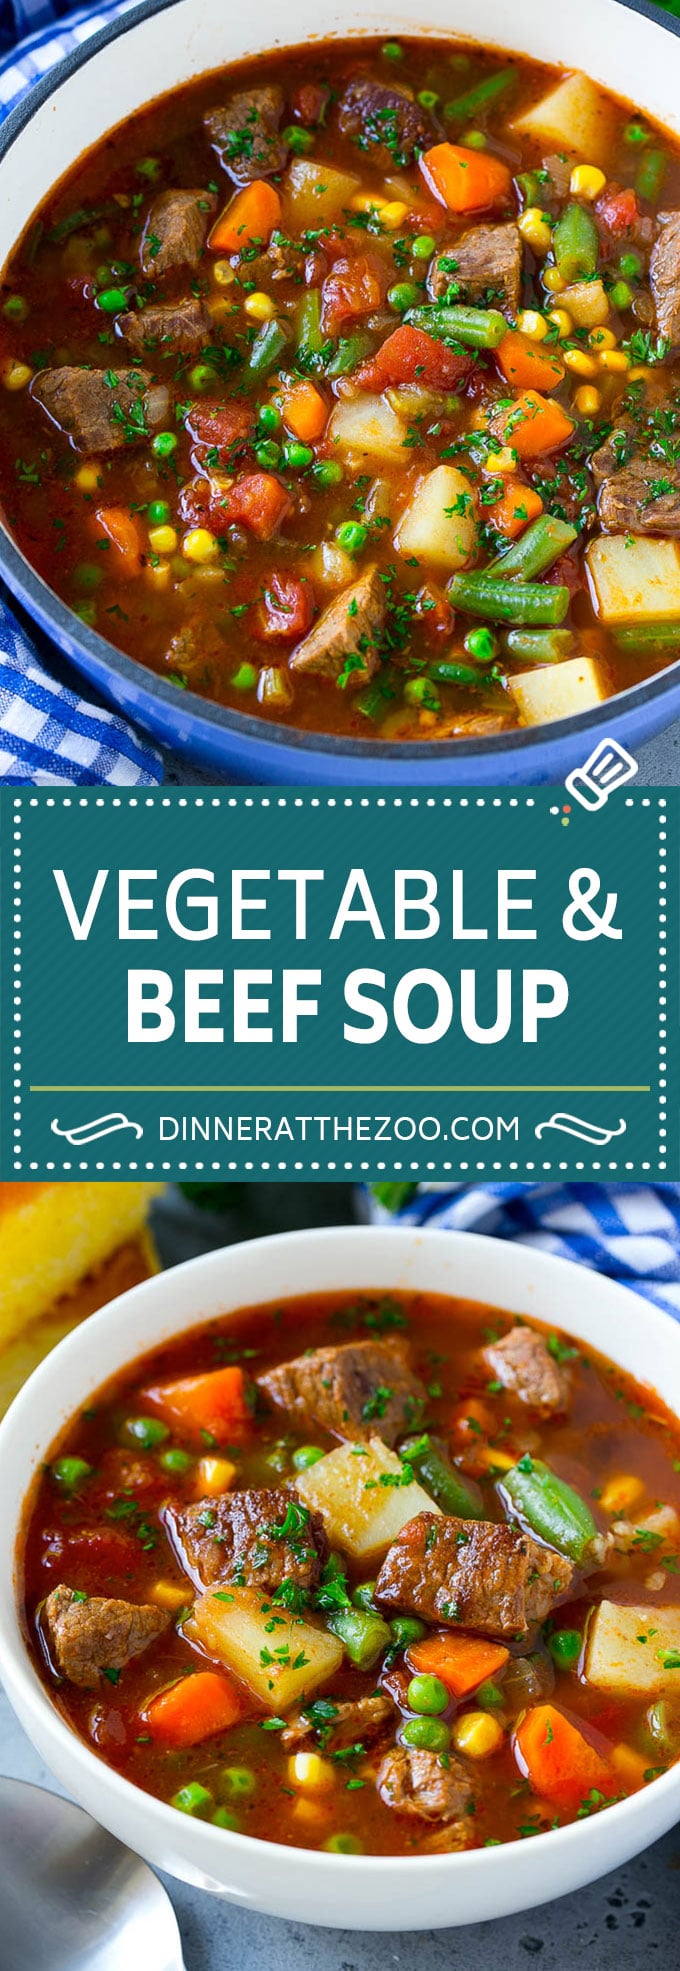 Vegetable Beef Soup Recipe | Beef Vegetable Soup | Beef Soup #beef #veggies #soup #dinner #glutenfree #dinneratthezoo